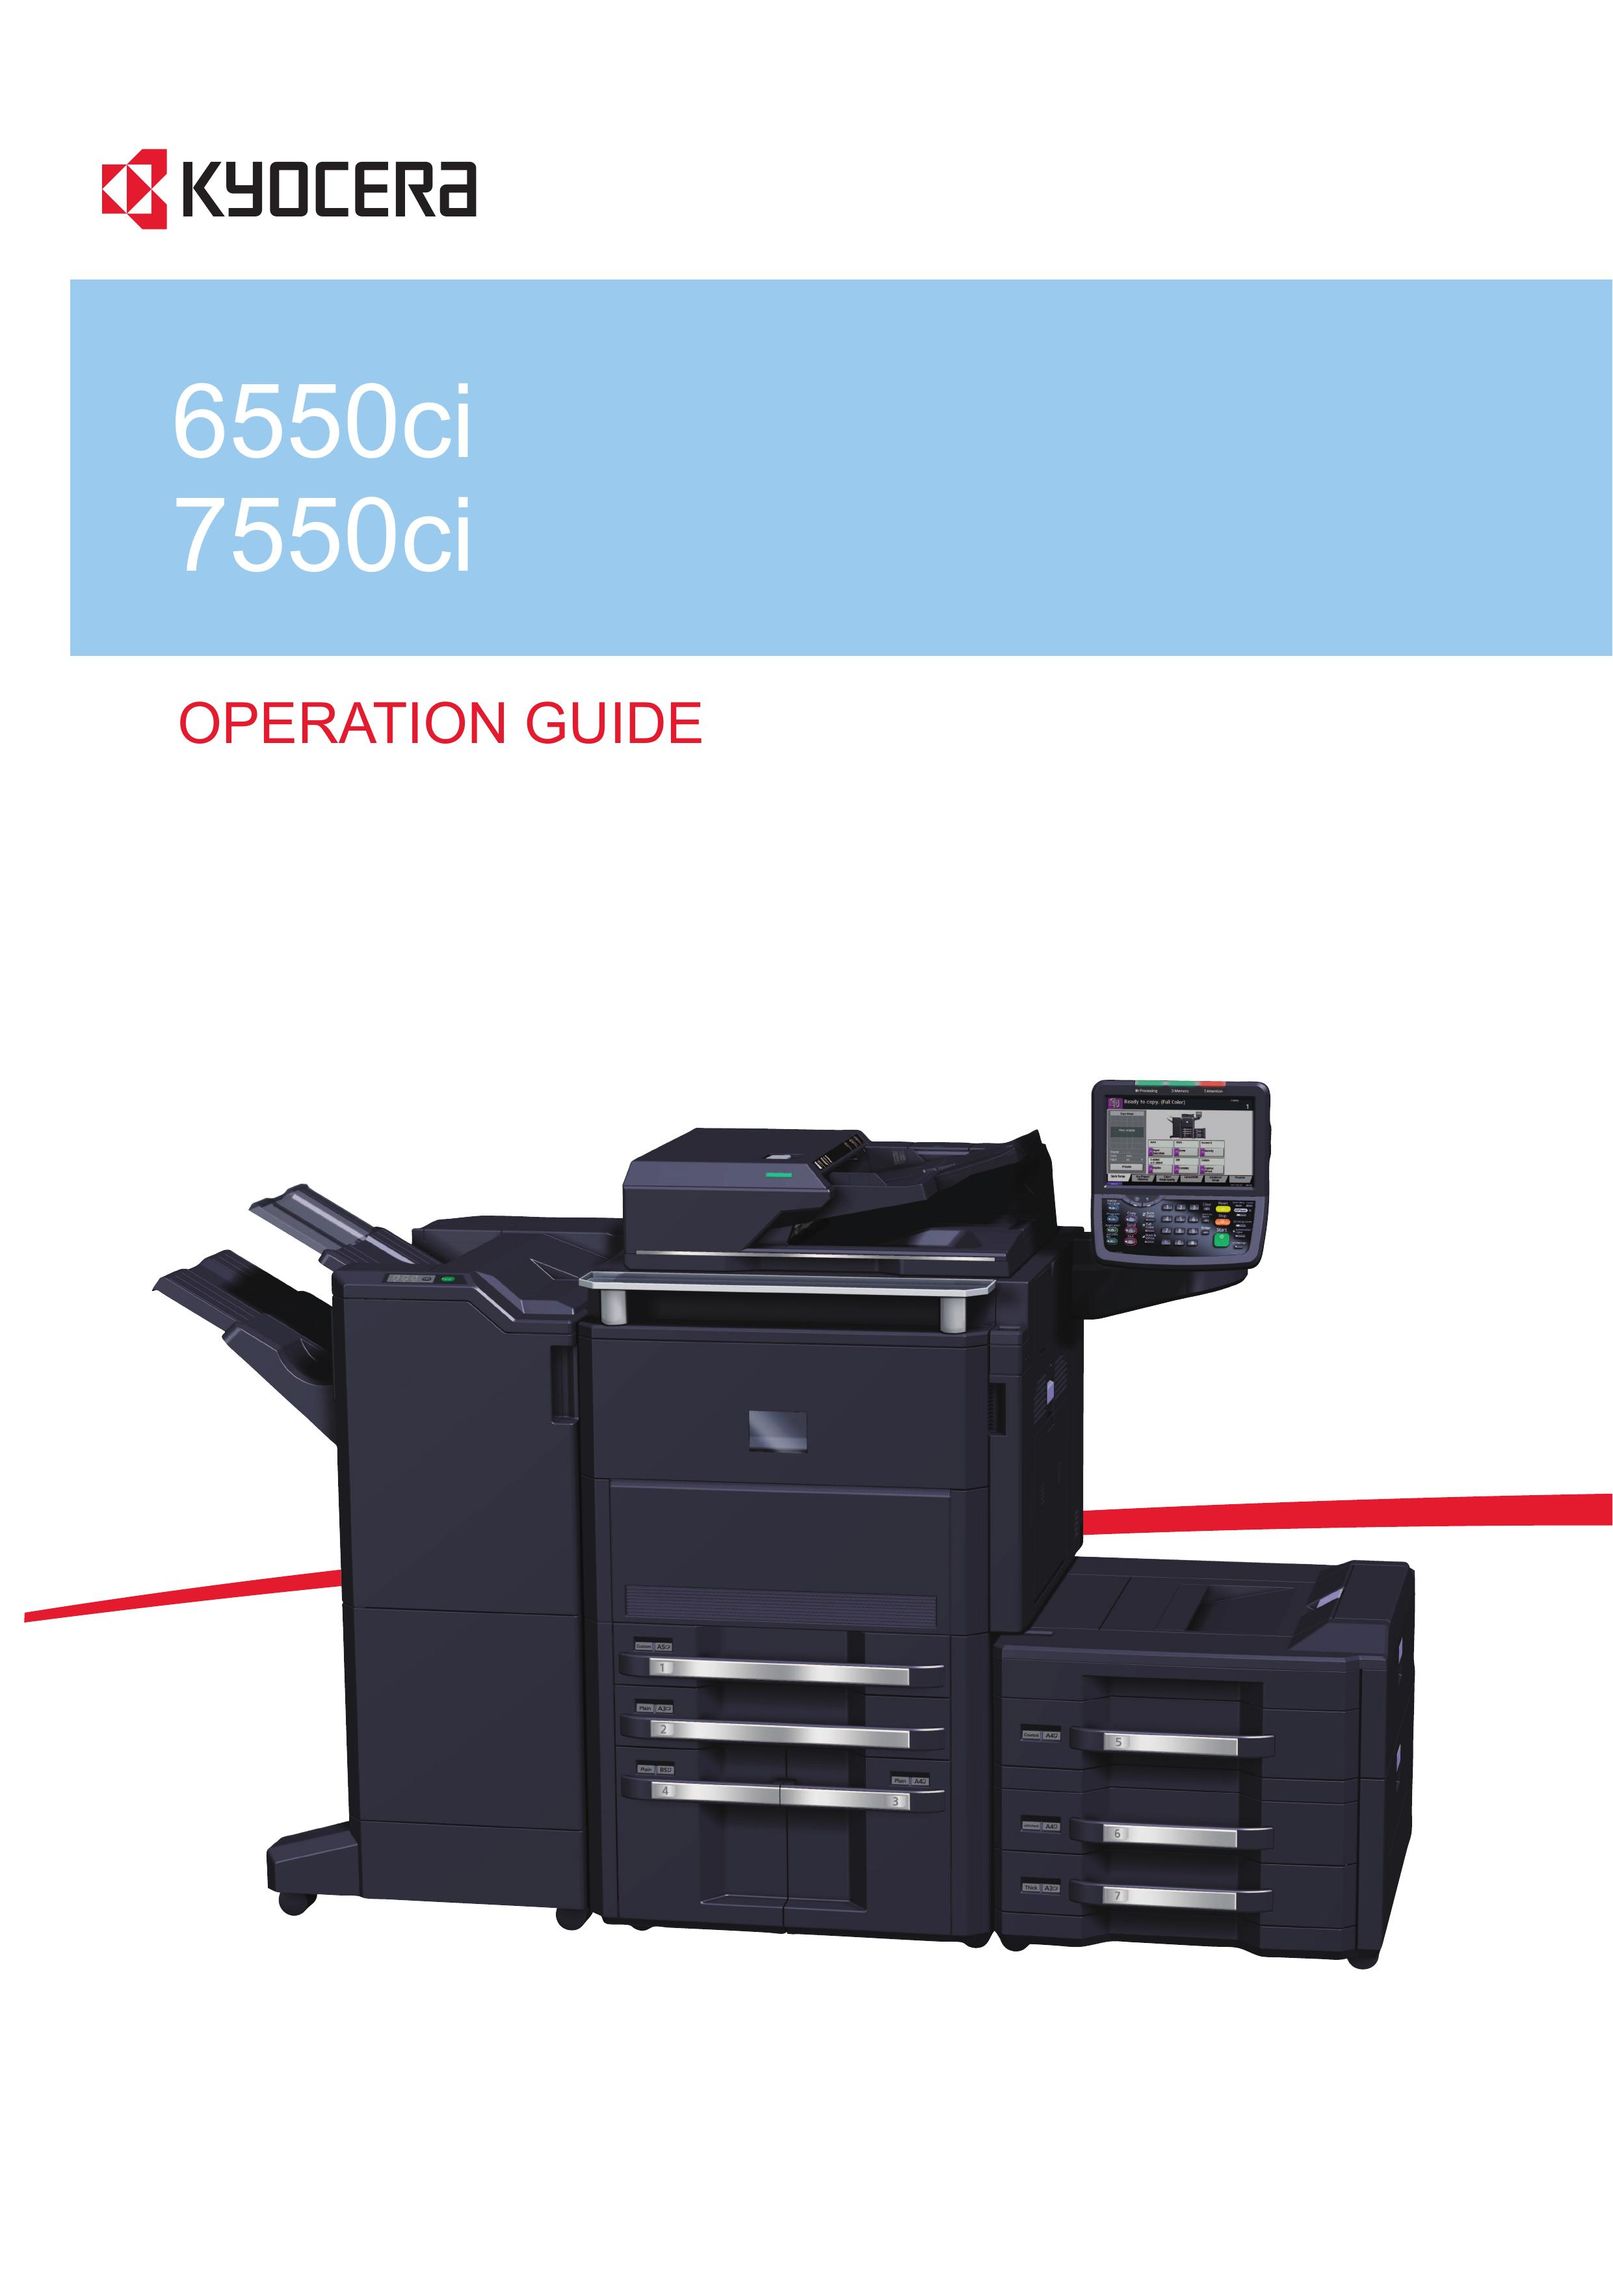 Kyocera 7550ci All in One Printer User Manual